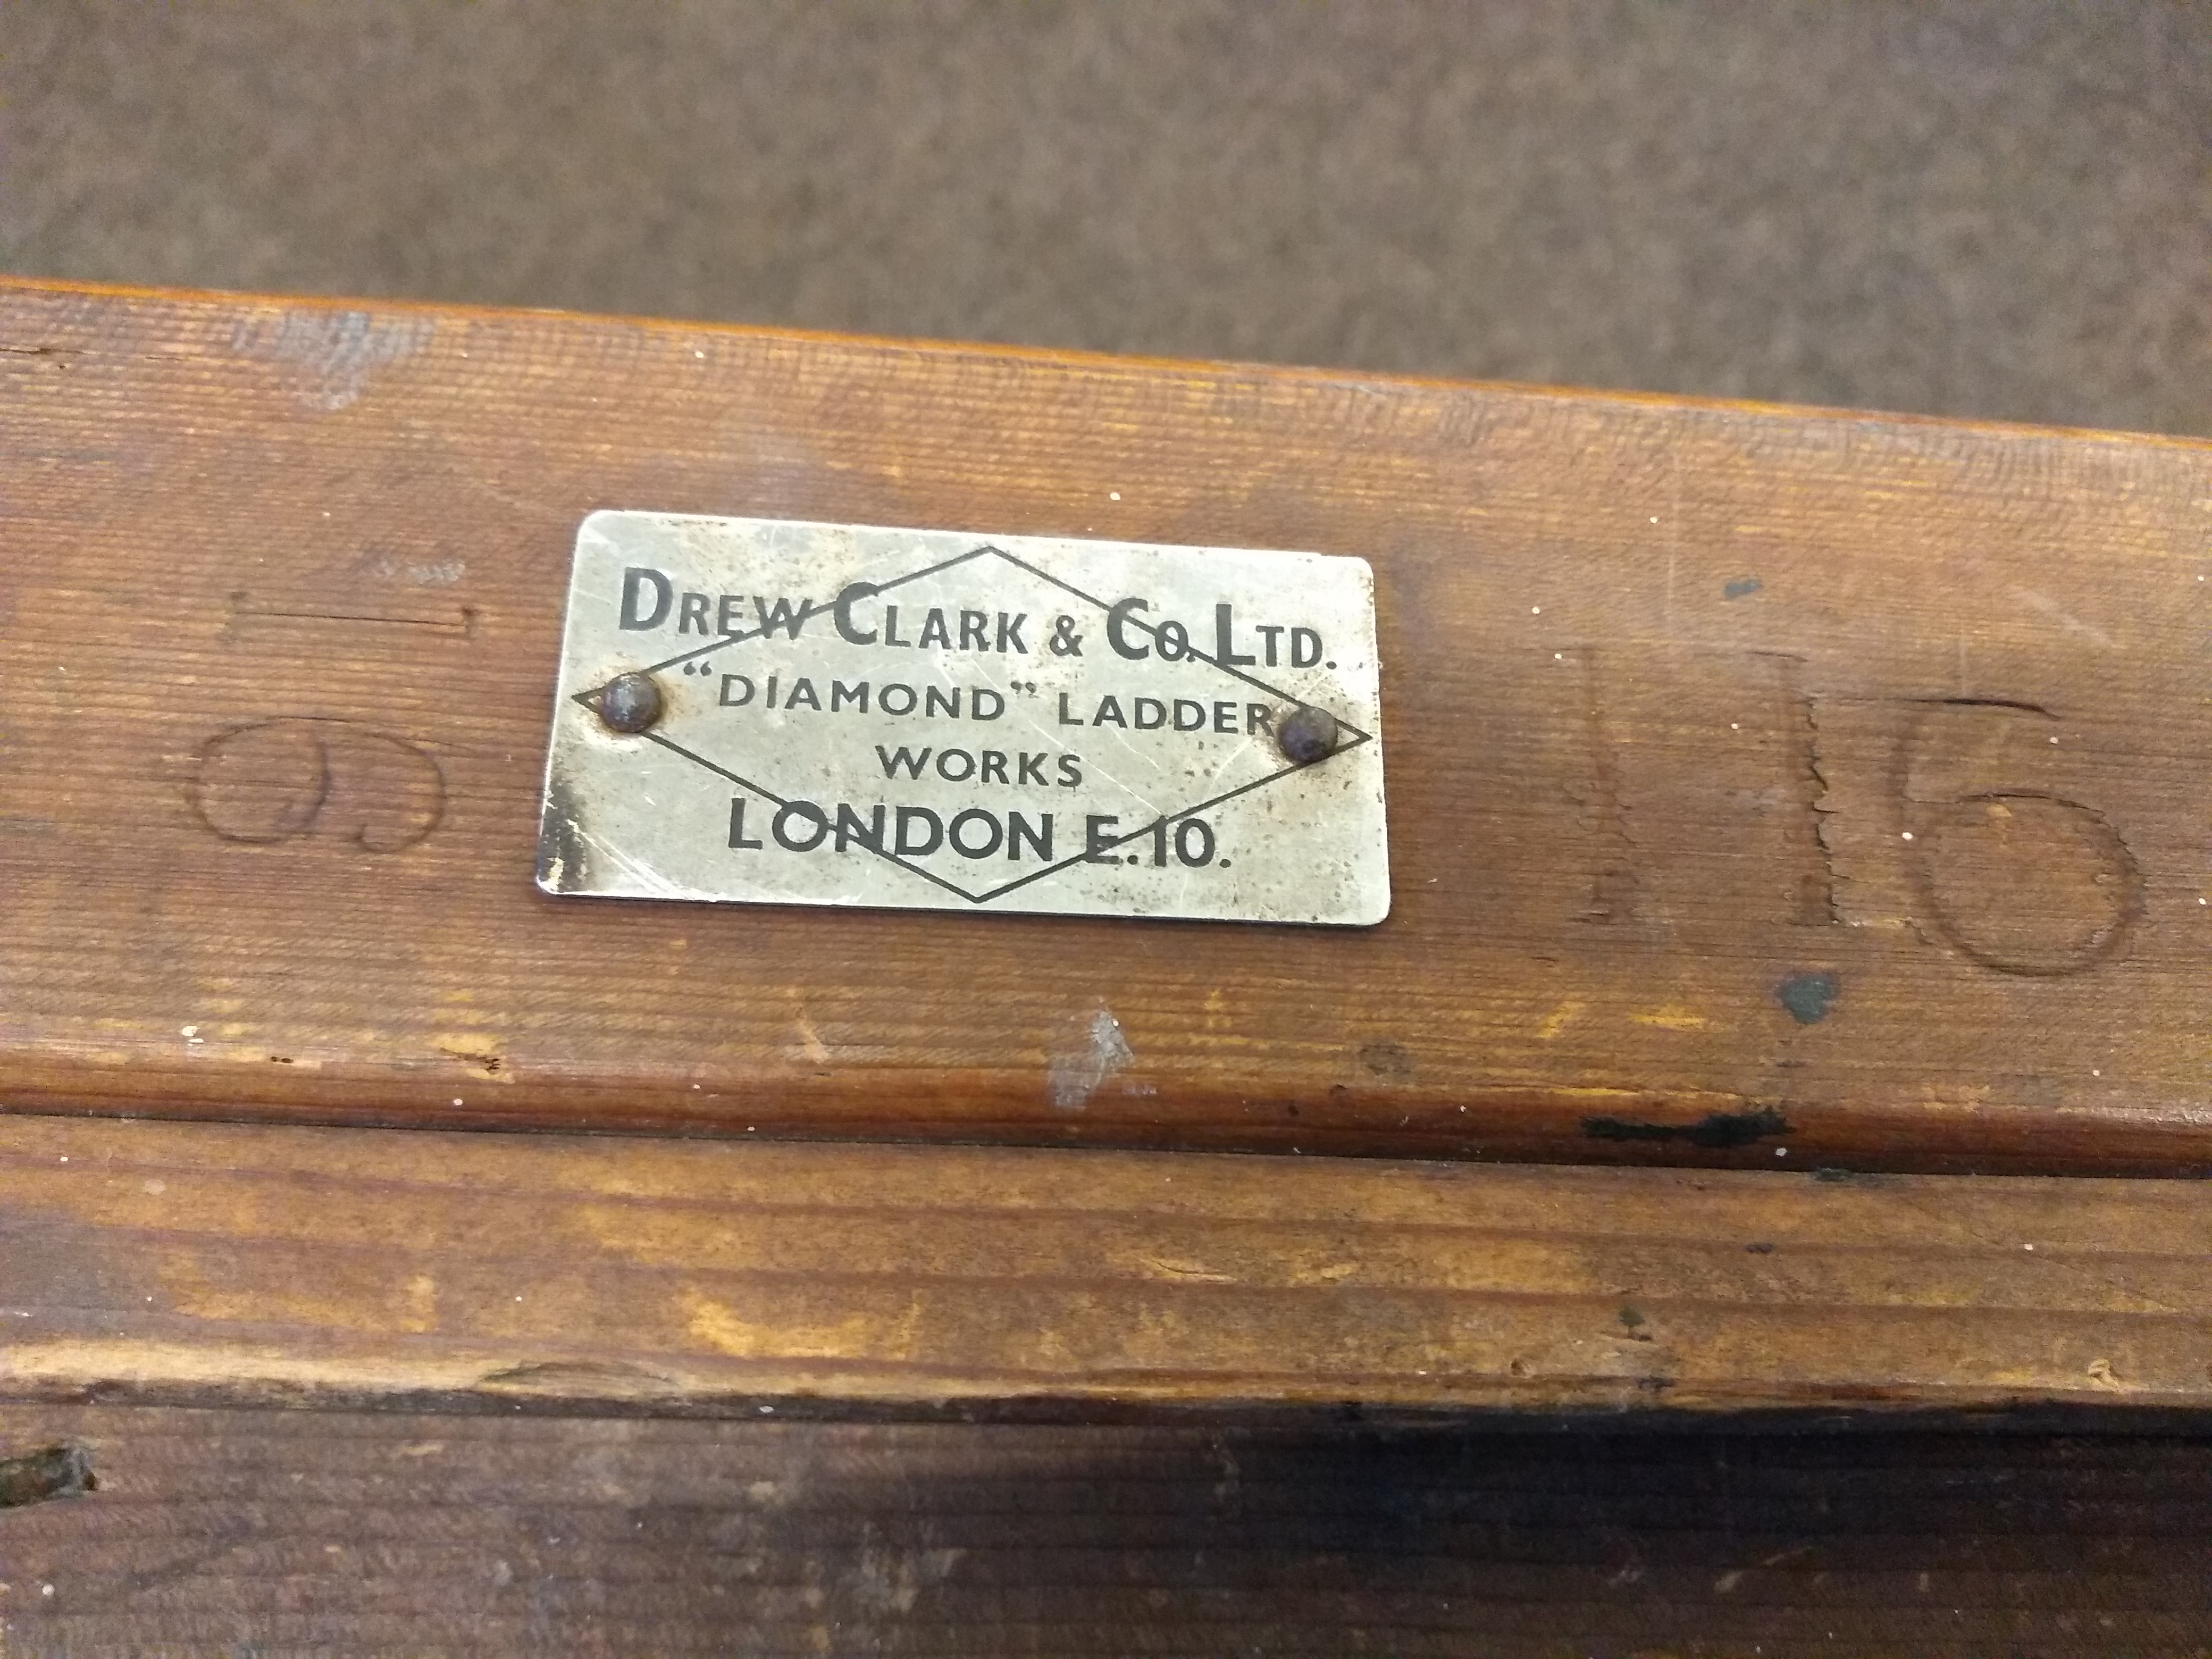 Vintage wooden extending ladder, labelled Drew Clark & Co Ltd Diamond Ladder Works. - Image 2 of 2